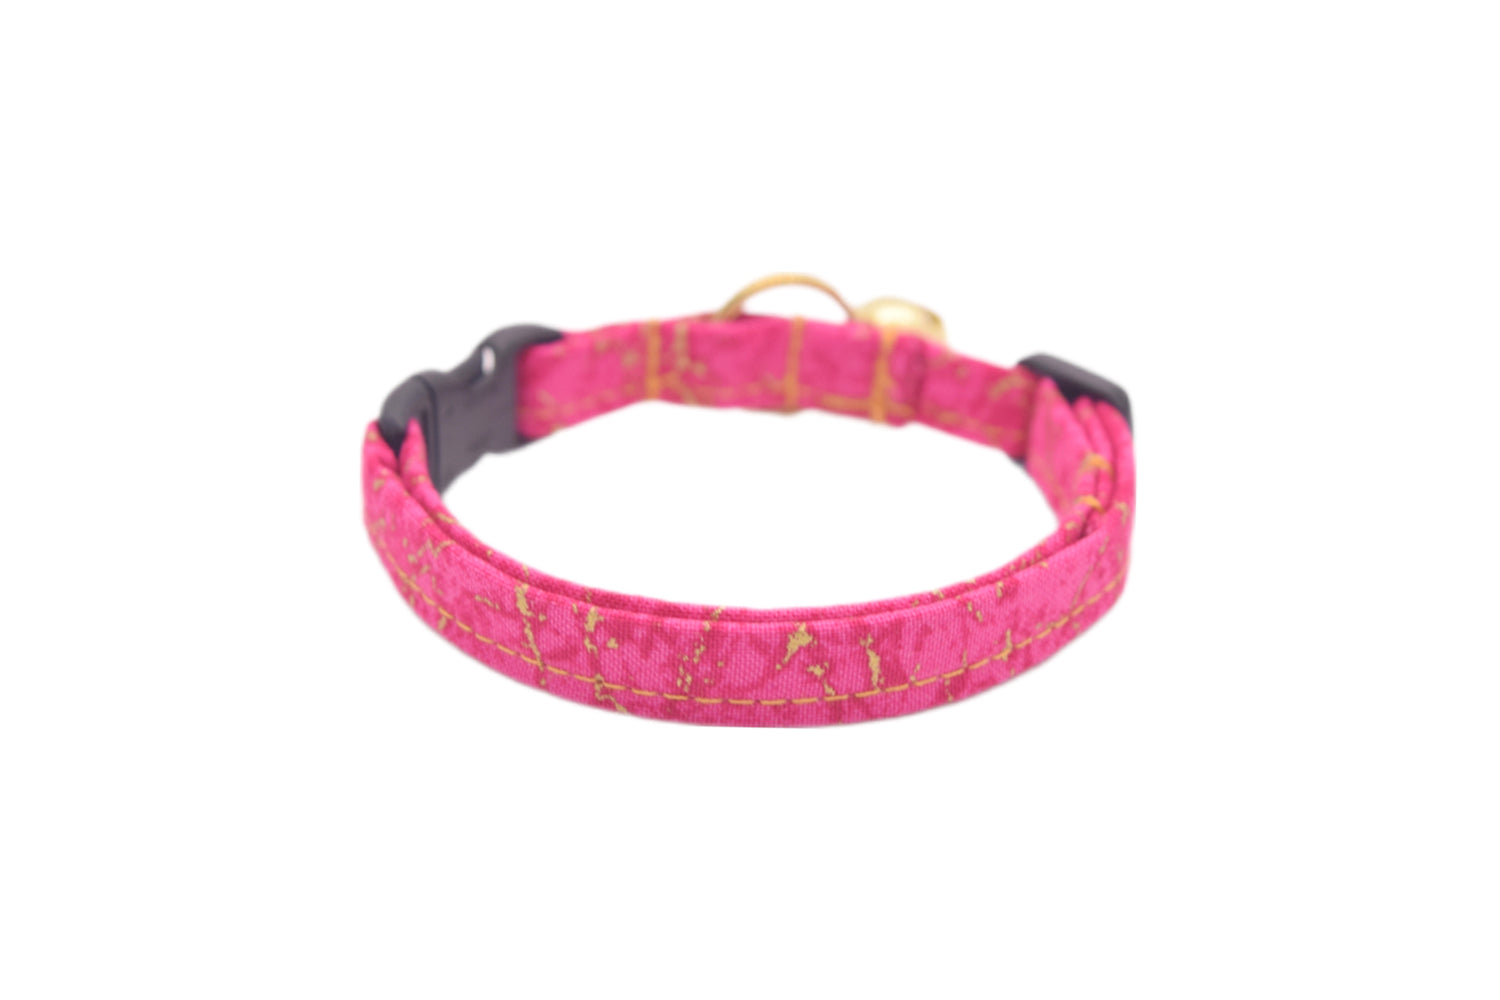 Hot Pink Cat Collar - Pink & Gold Marble Breakaway Cat Collar - Handmade by Kira's Pet Shop